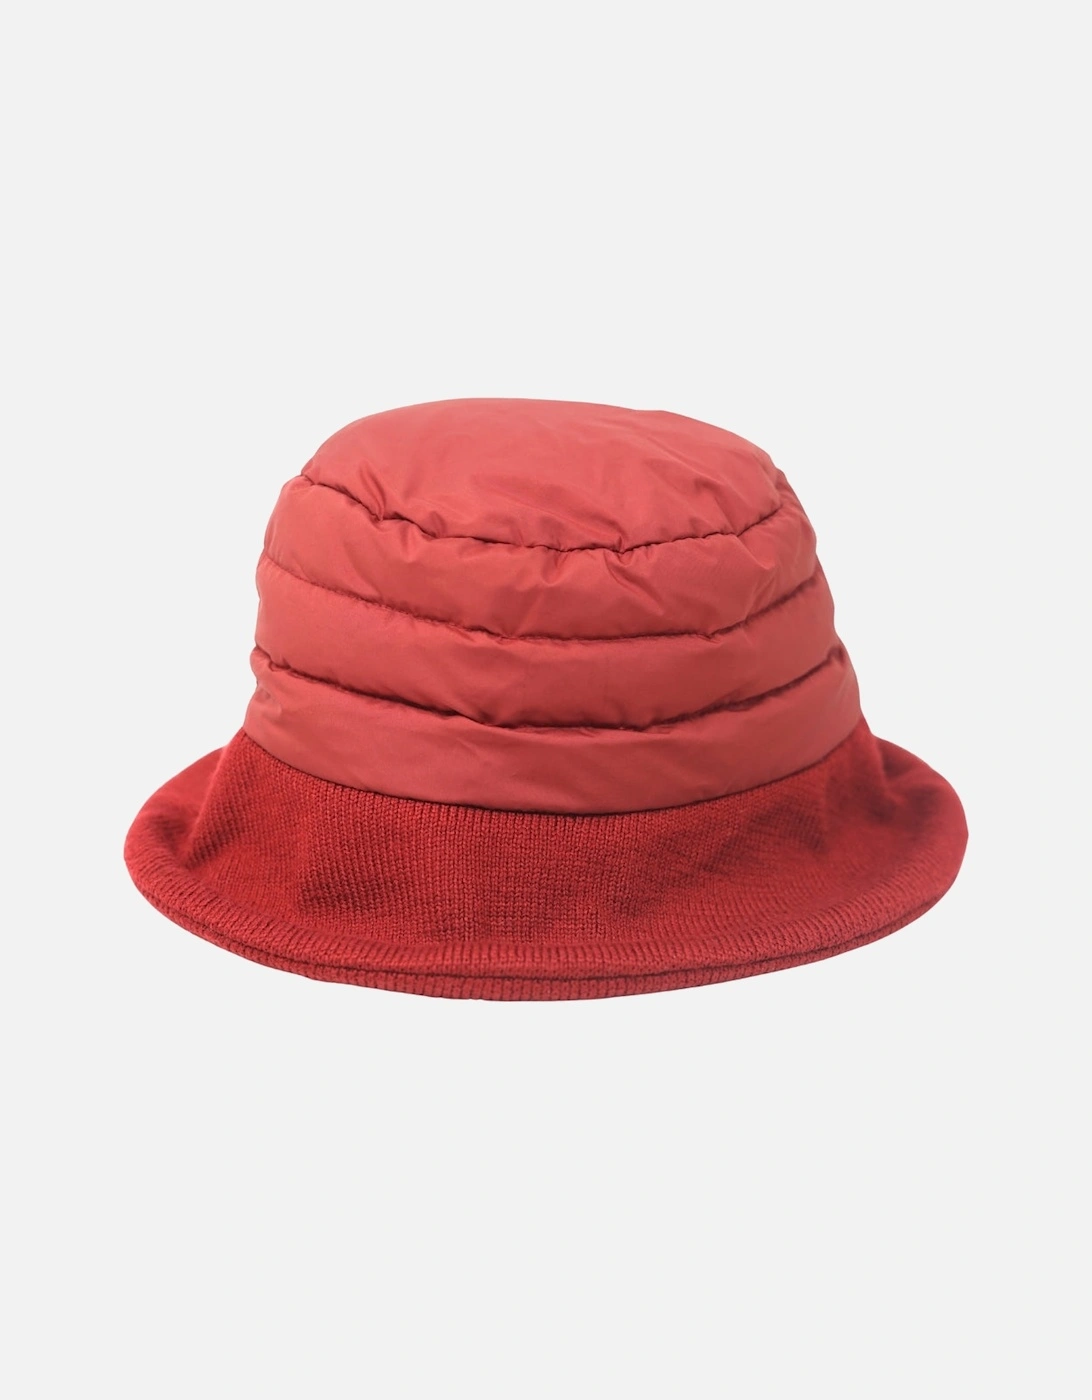 Puffer Bucket Hat Rio Red Cap